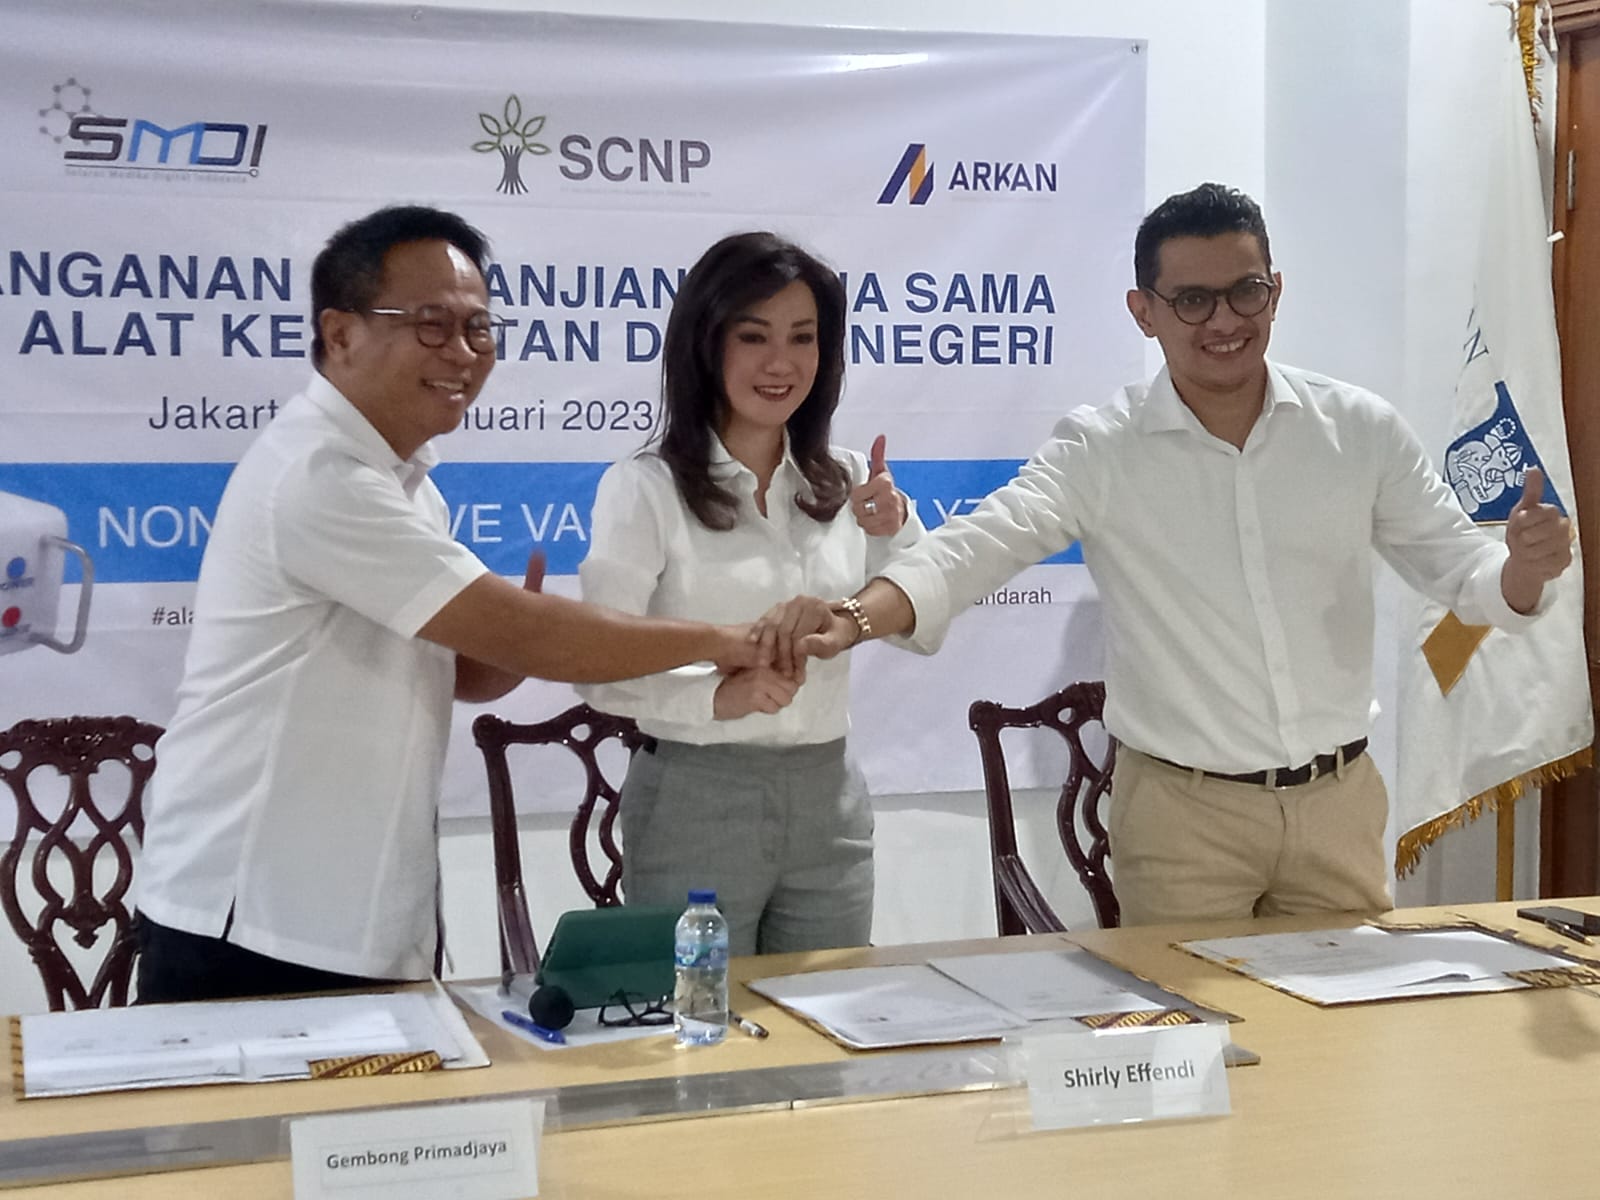 Gandeng SMDI dan AJN, Selaras Citra Nusantara (SCNP) Siap Sebar Luaskan Alkes NIVA